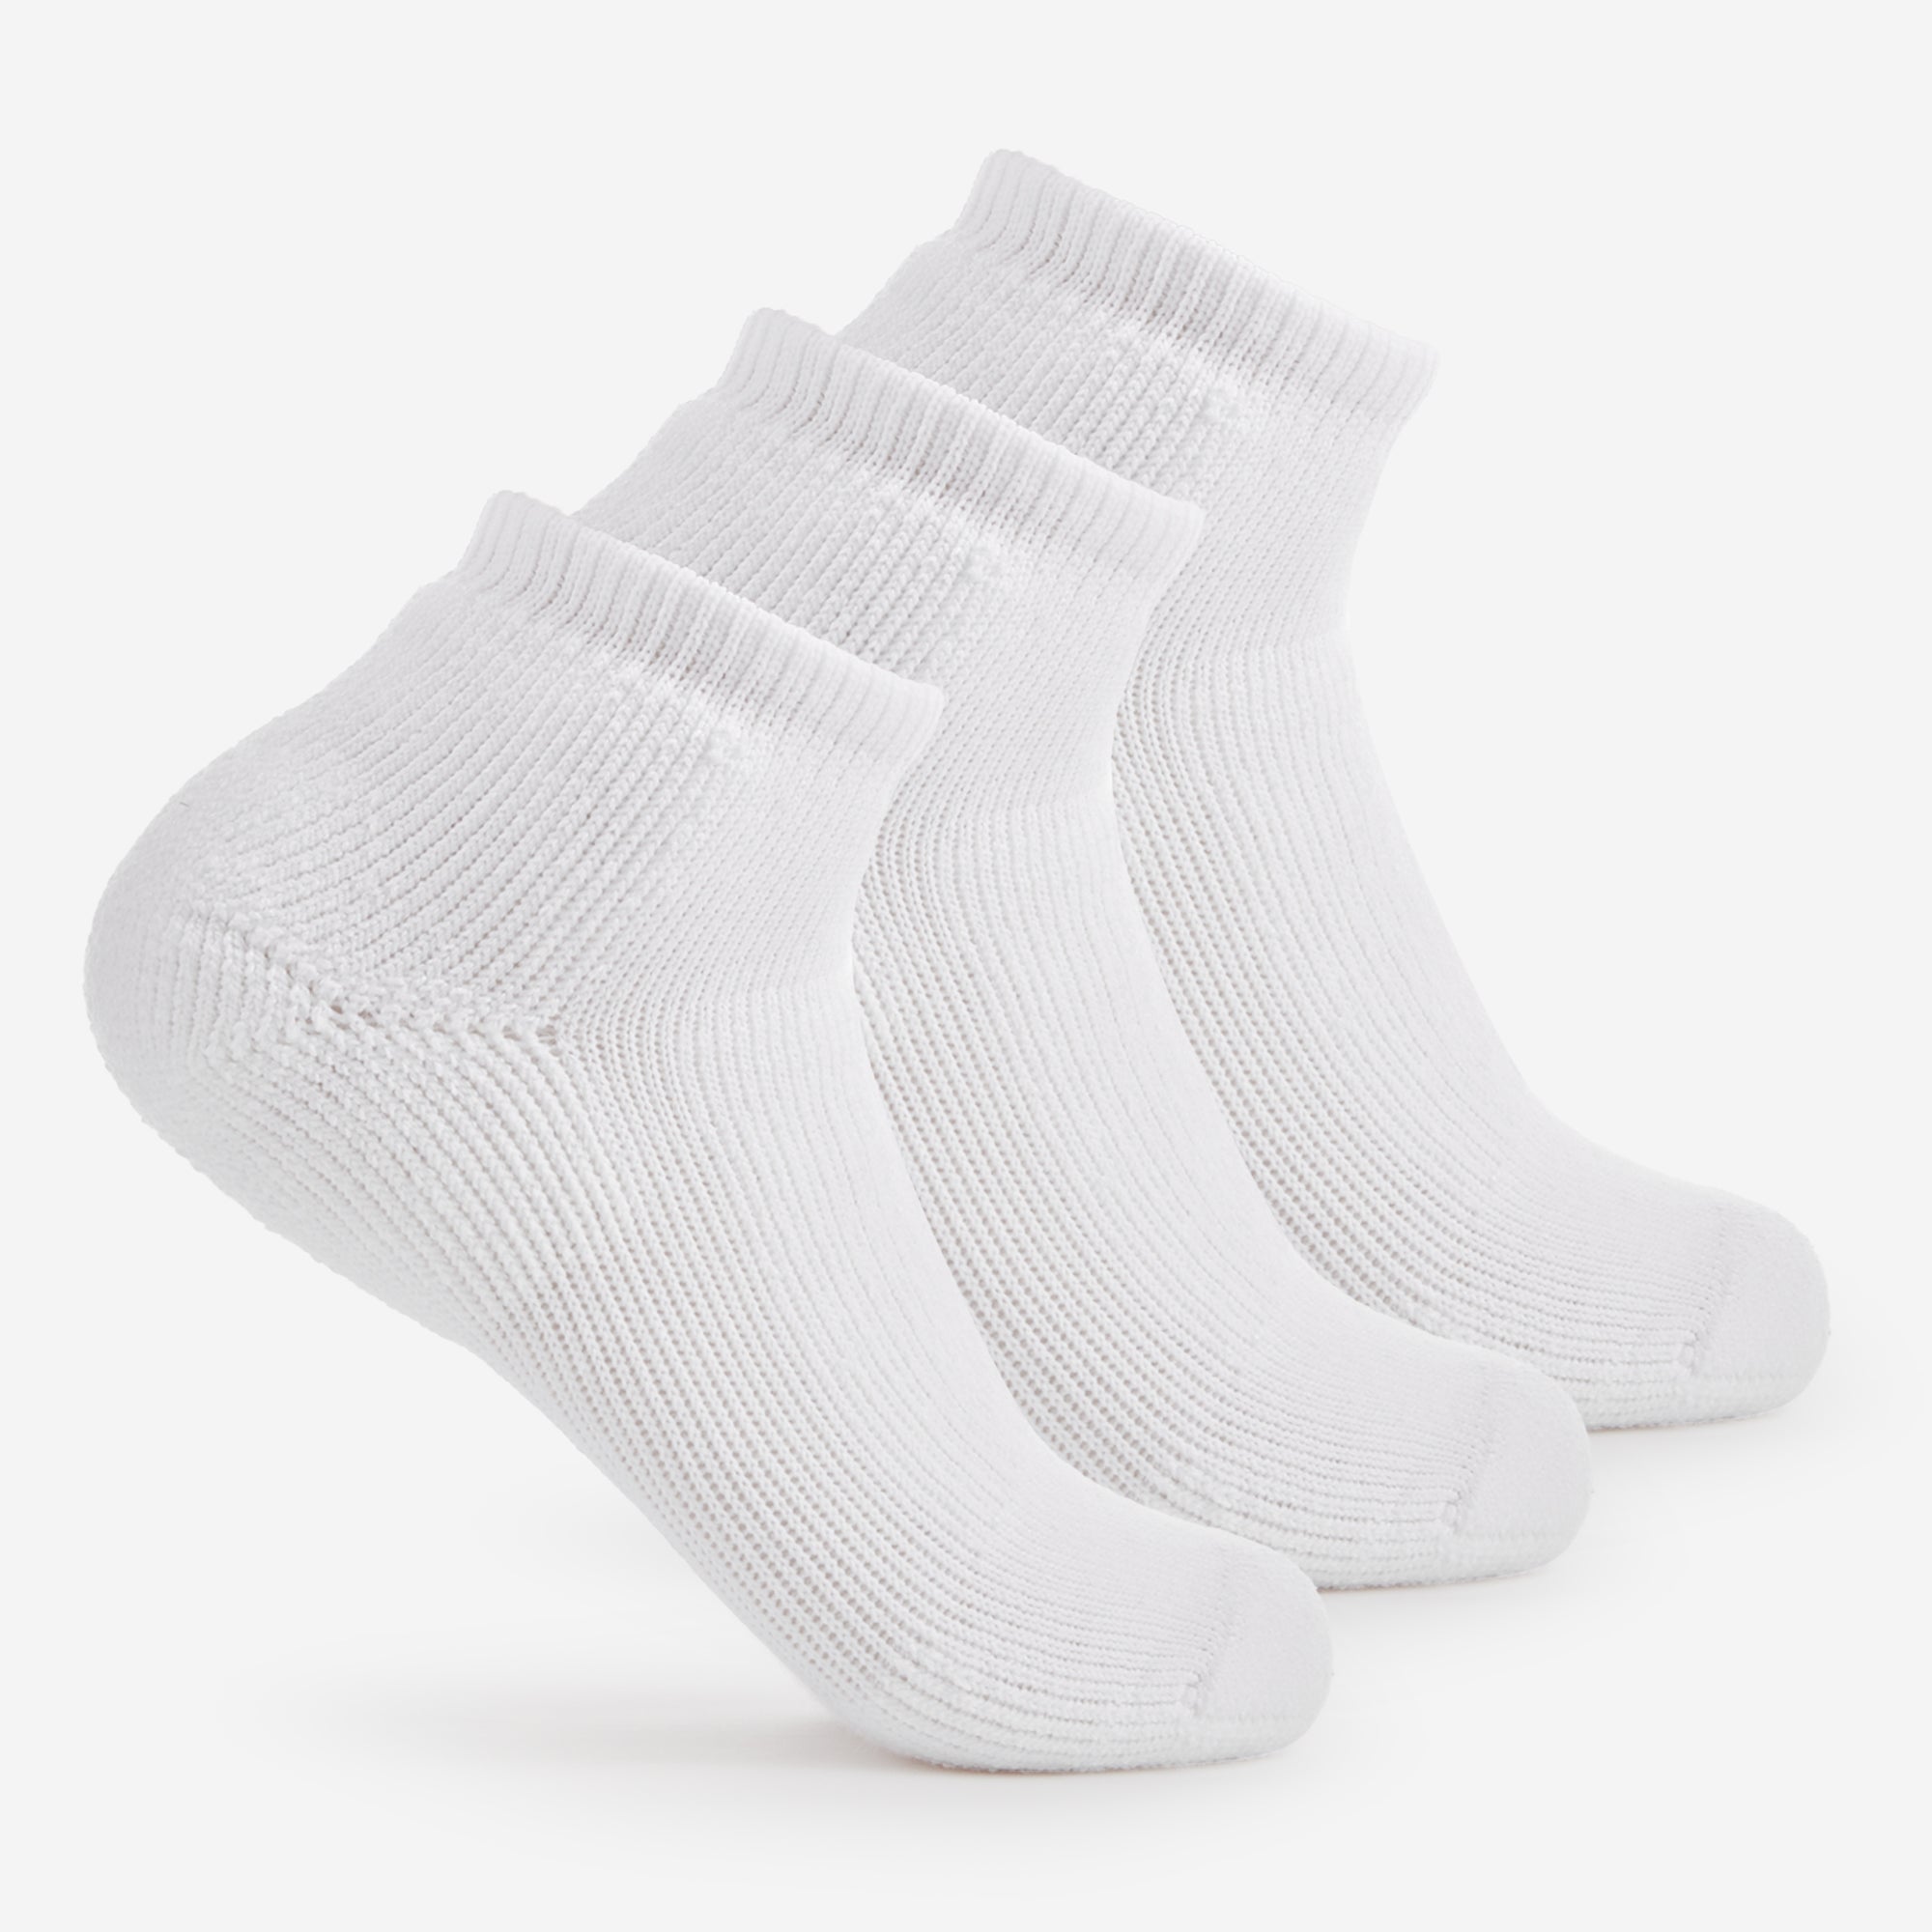 Men's Low-Cut Socks